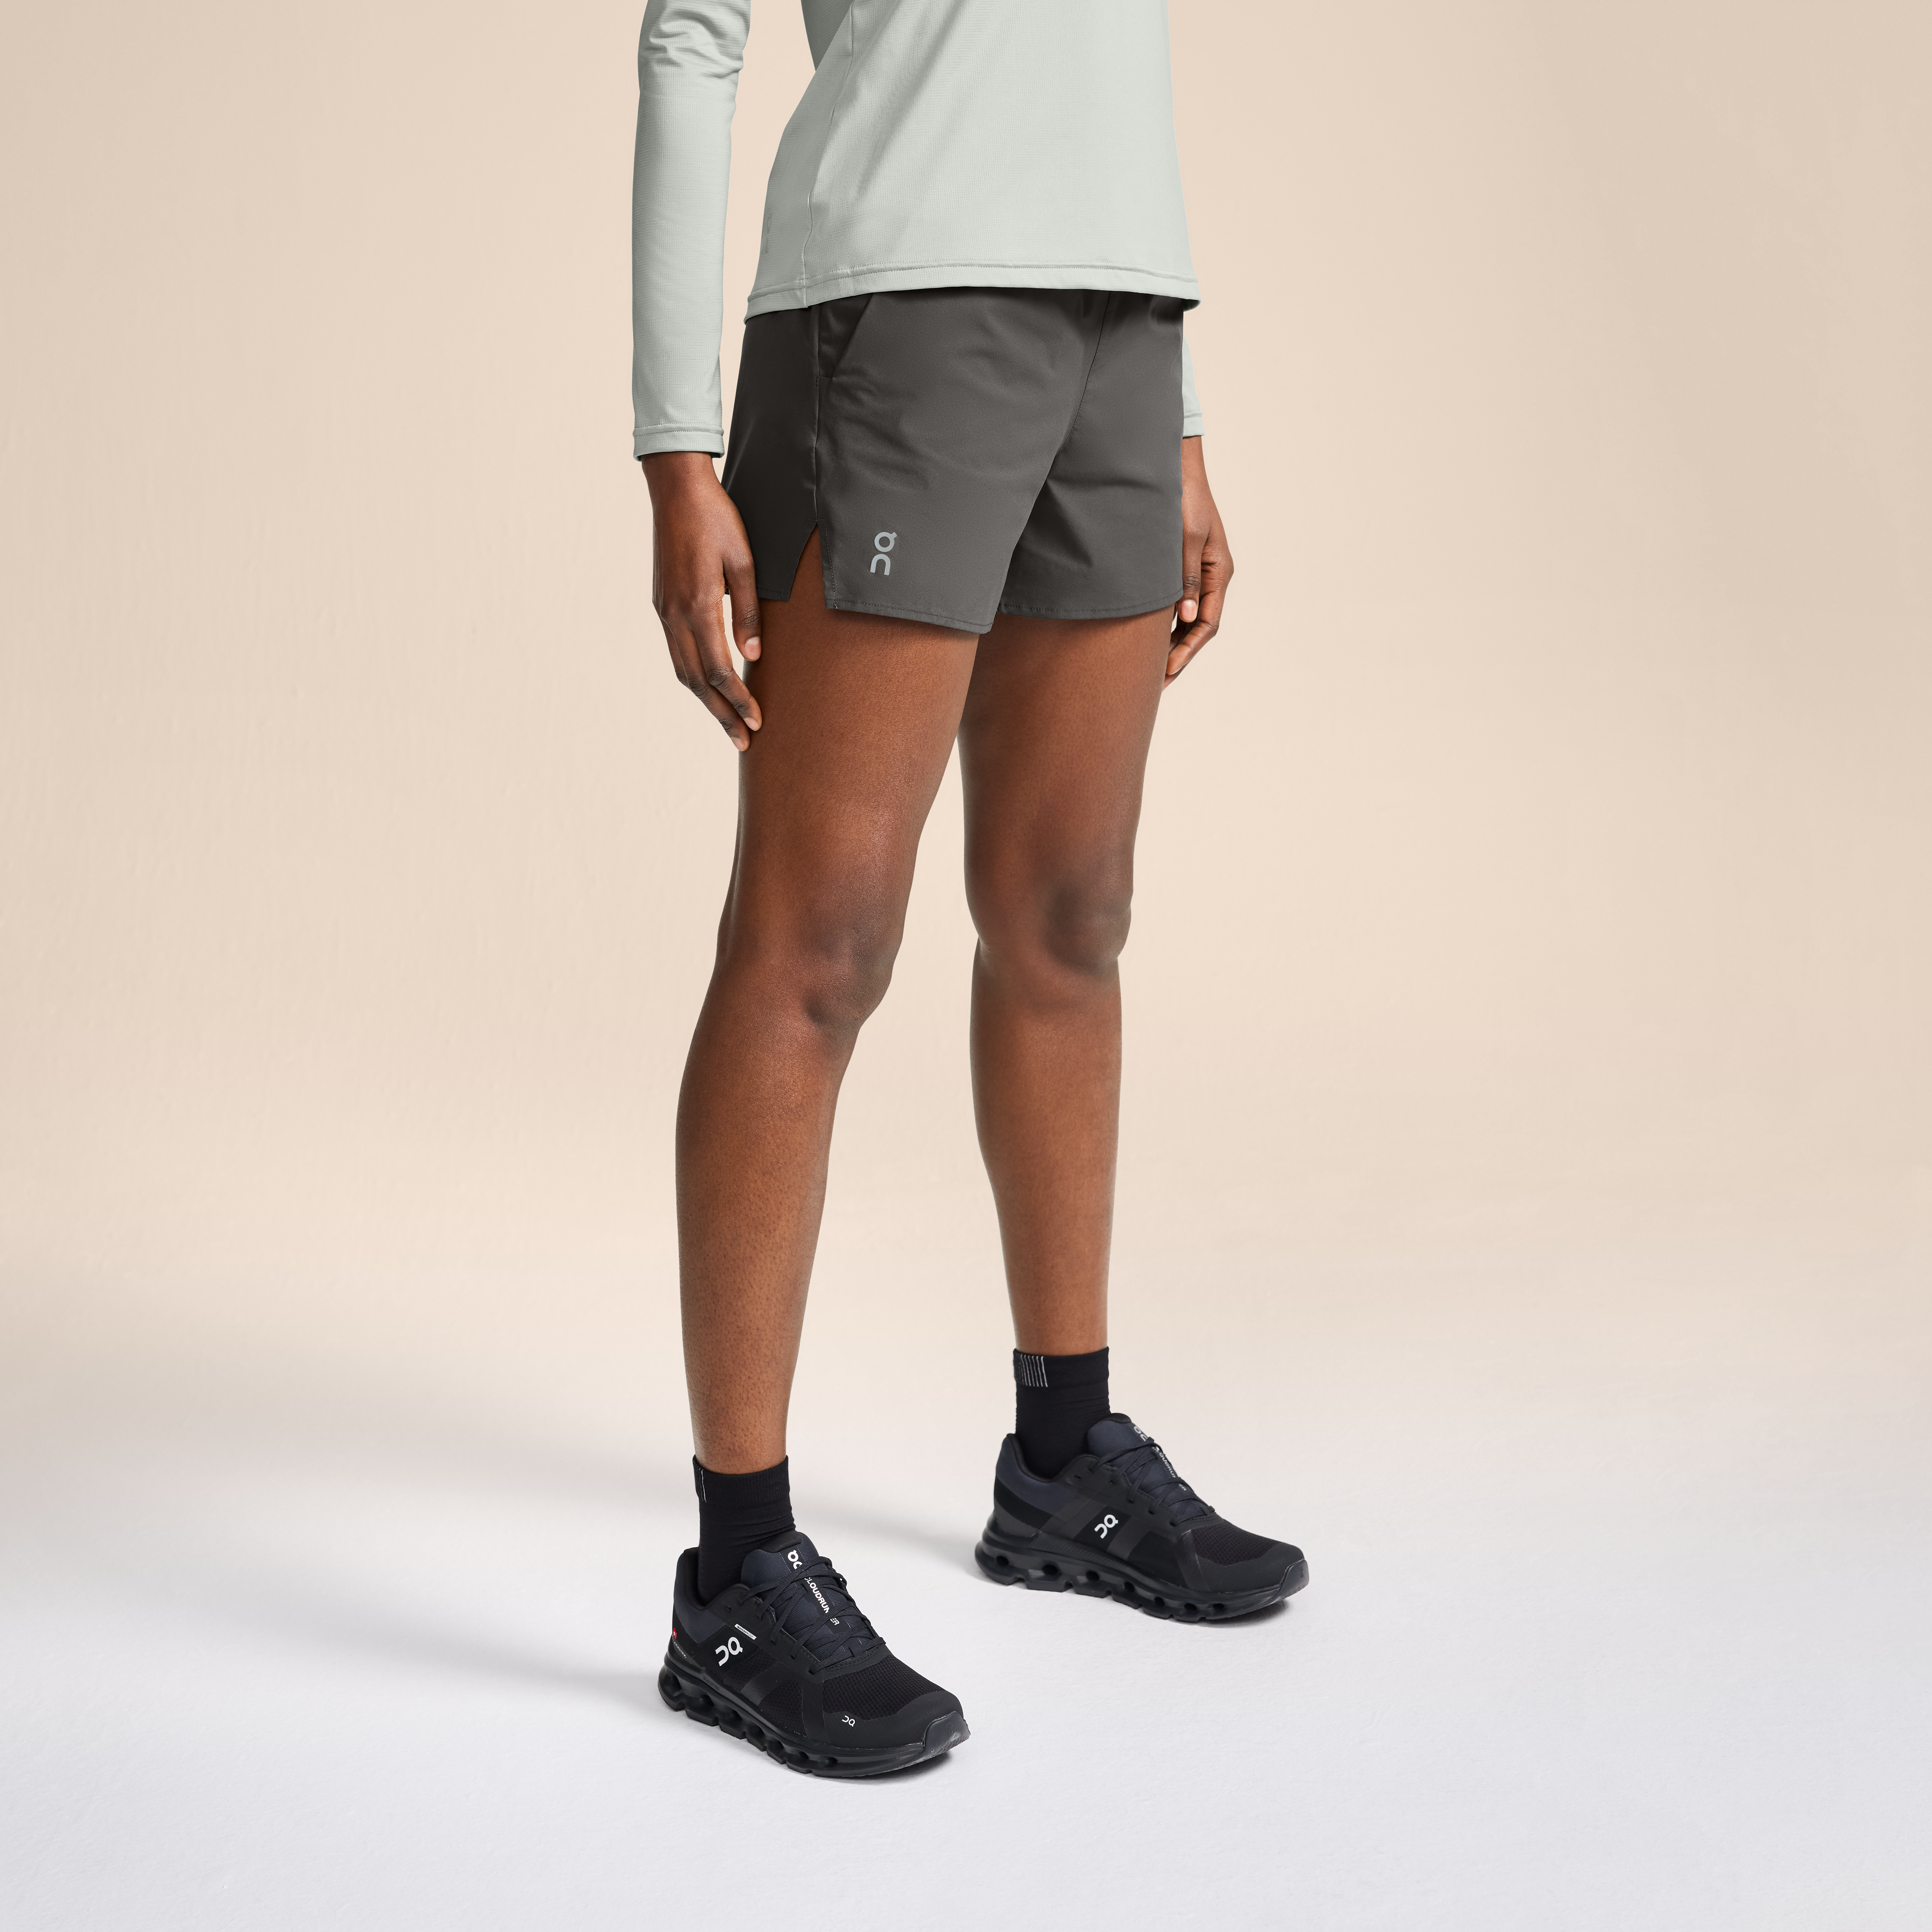 On Essential Shorts Grey Women Running, everyday training, versatile Shorts